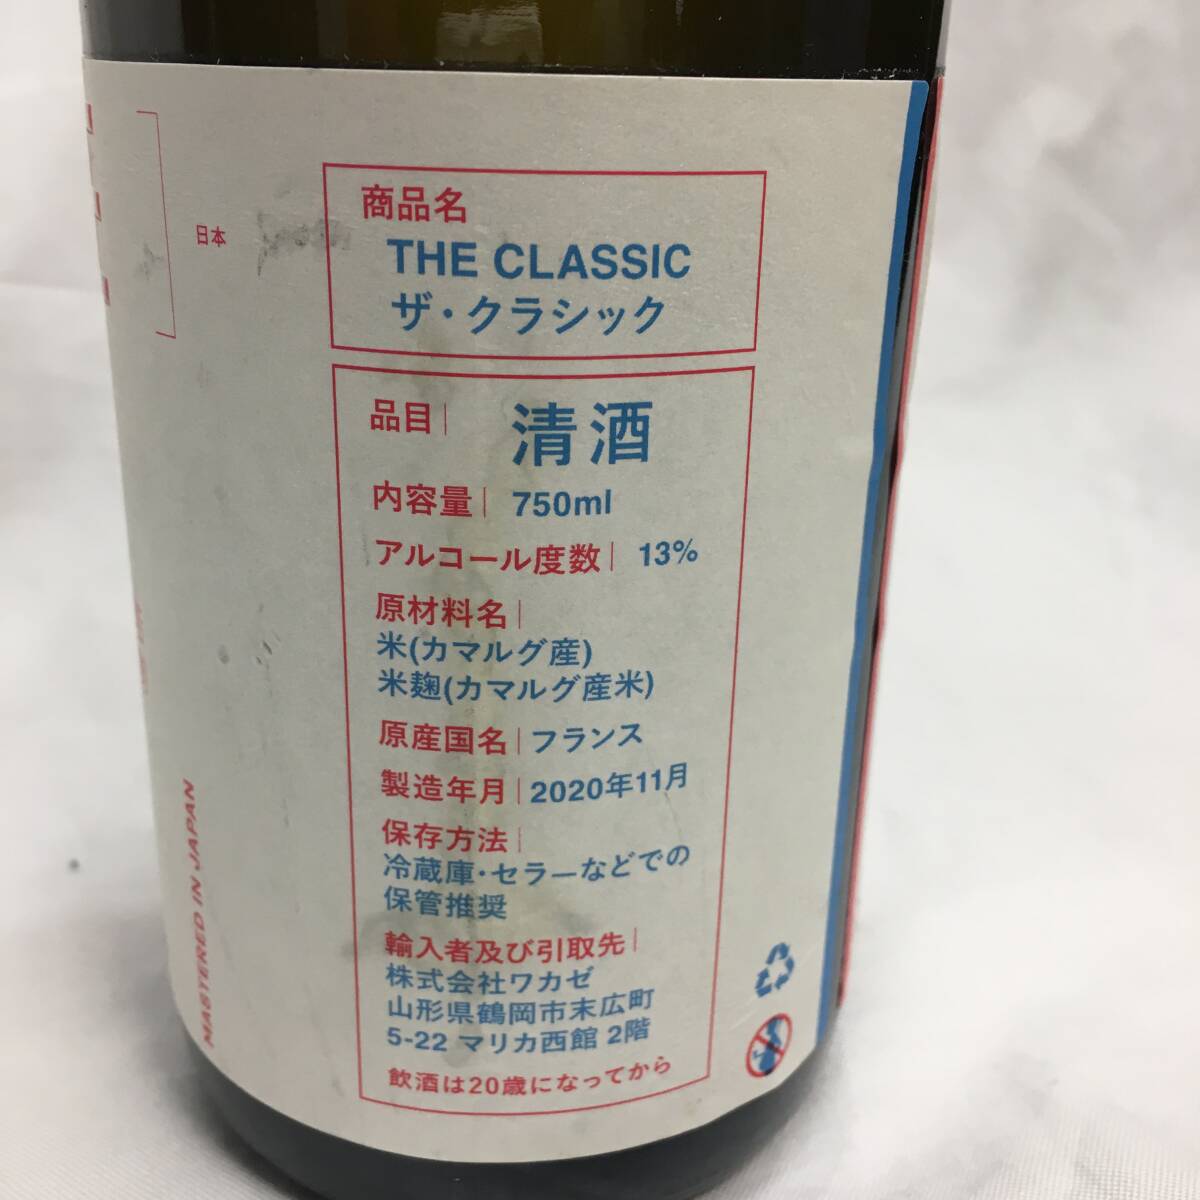 [ не . штекер ]WAKAZE THE CLASSIC Франция производство японкое рисовое вино (sake) 750ml алкоголь 13%